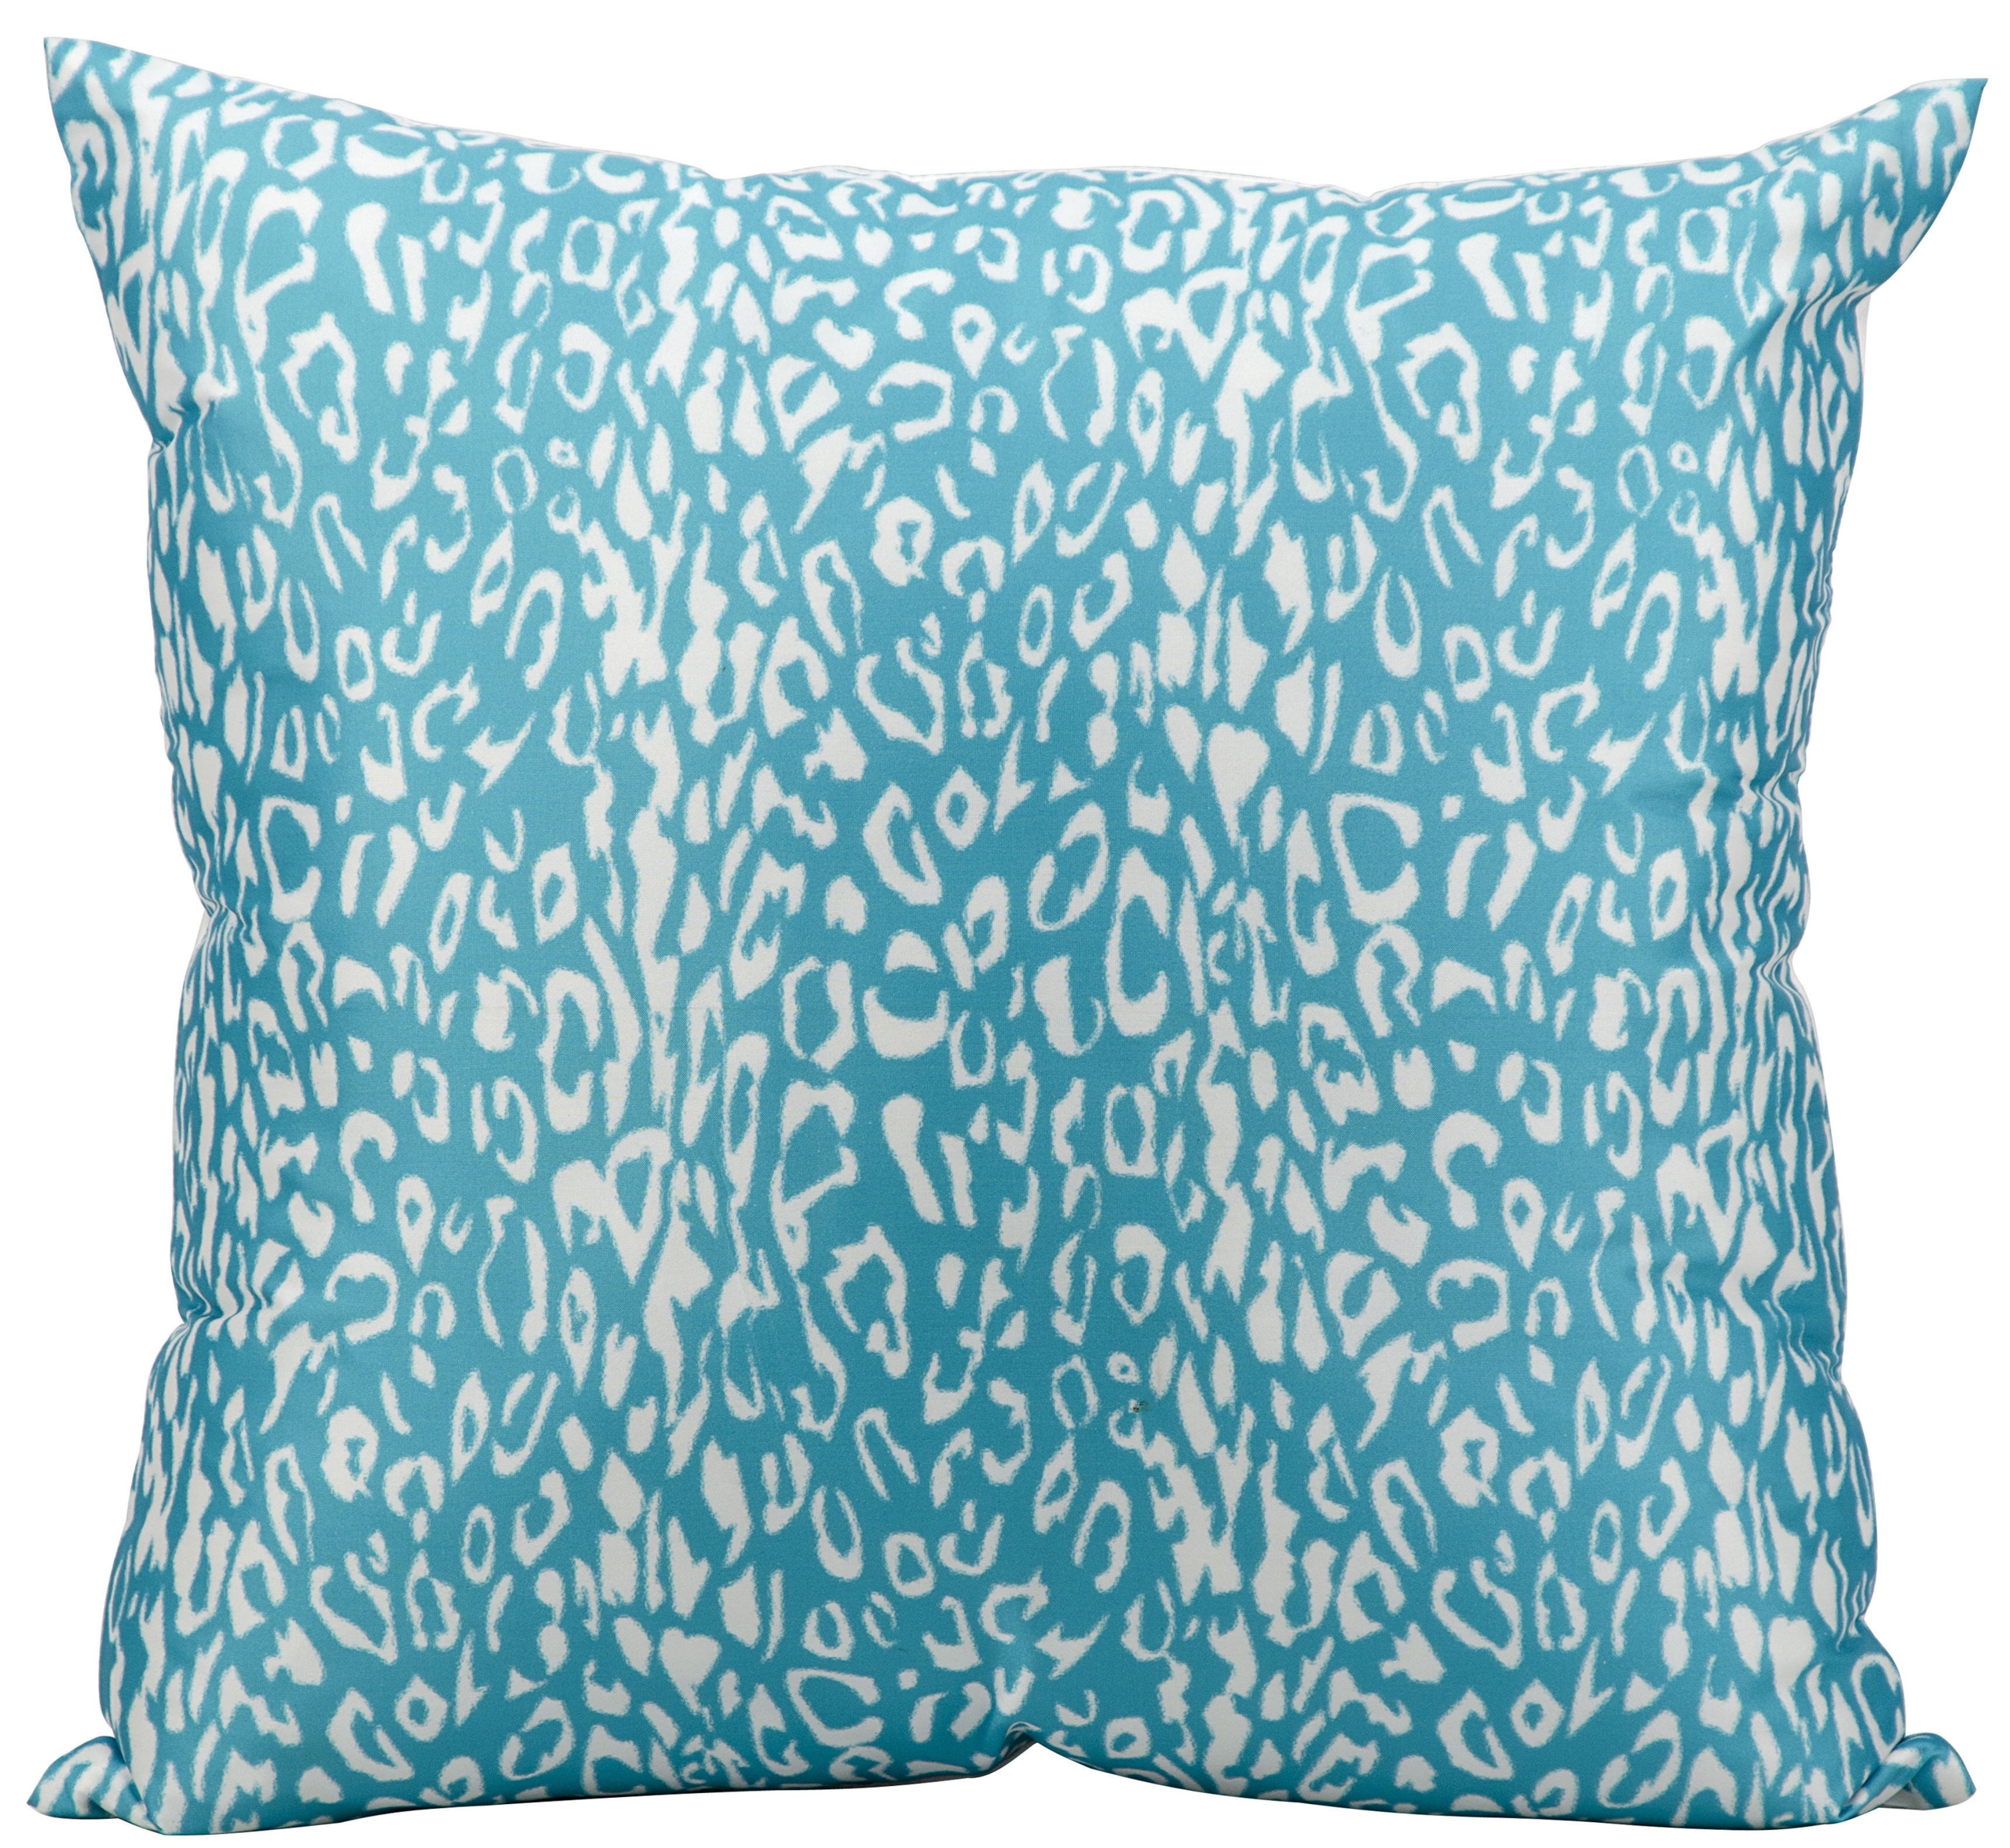 Leopard Print Indoor/Outdoor Polyester Throw Pillow